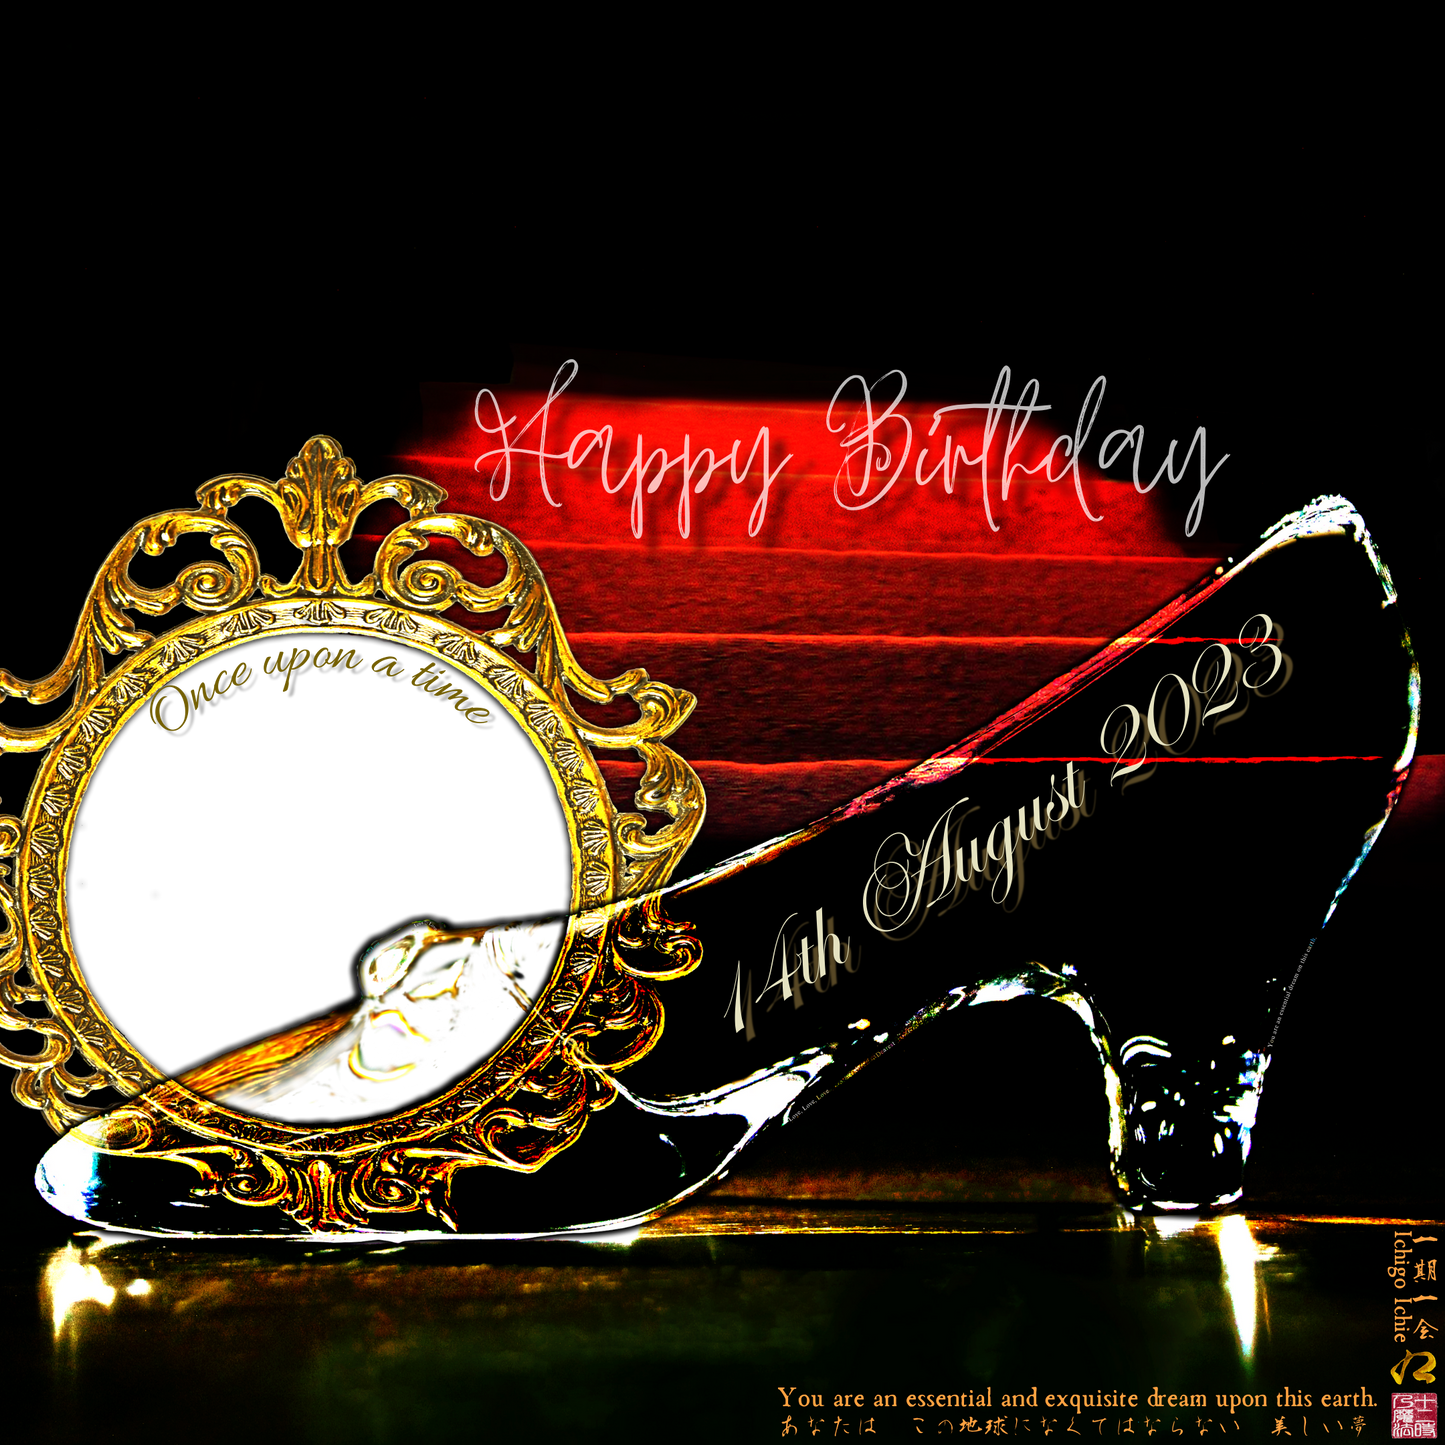 Happy Birthday Glass Slipper "Ichigo Ichie" 14th August 2023 the Left (1-of-1) NFT Art